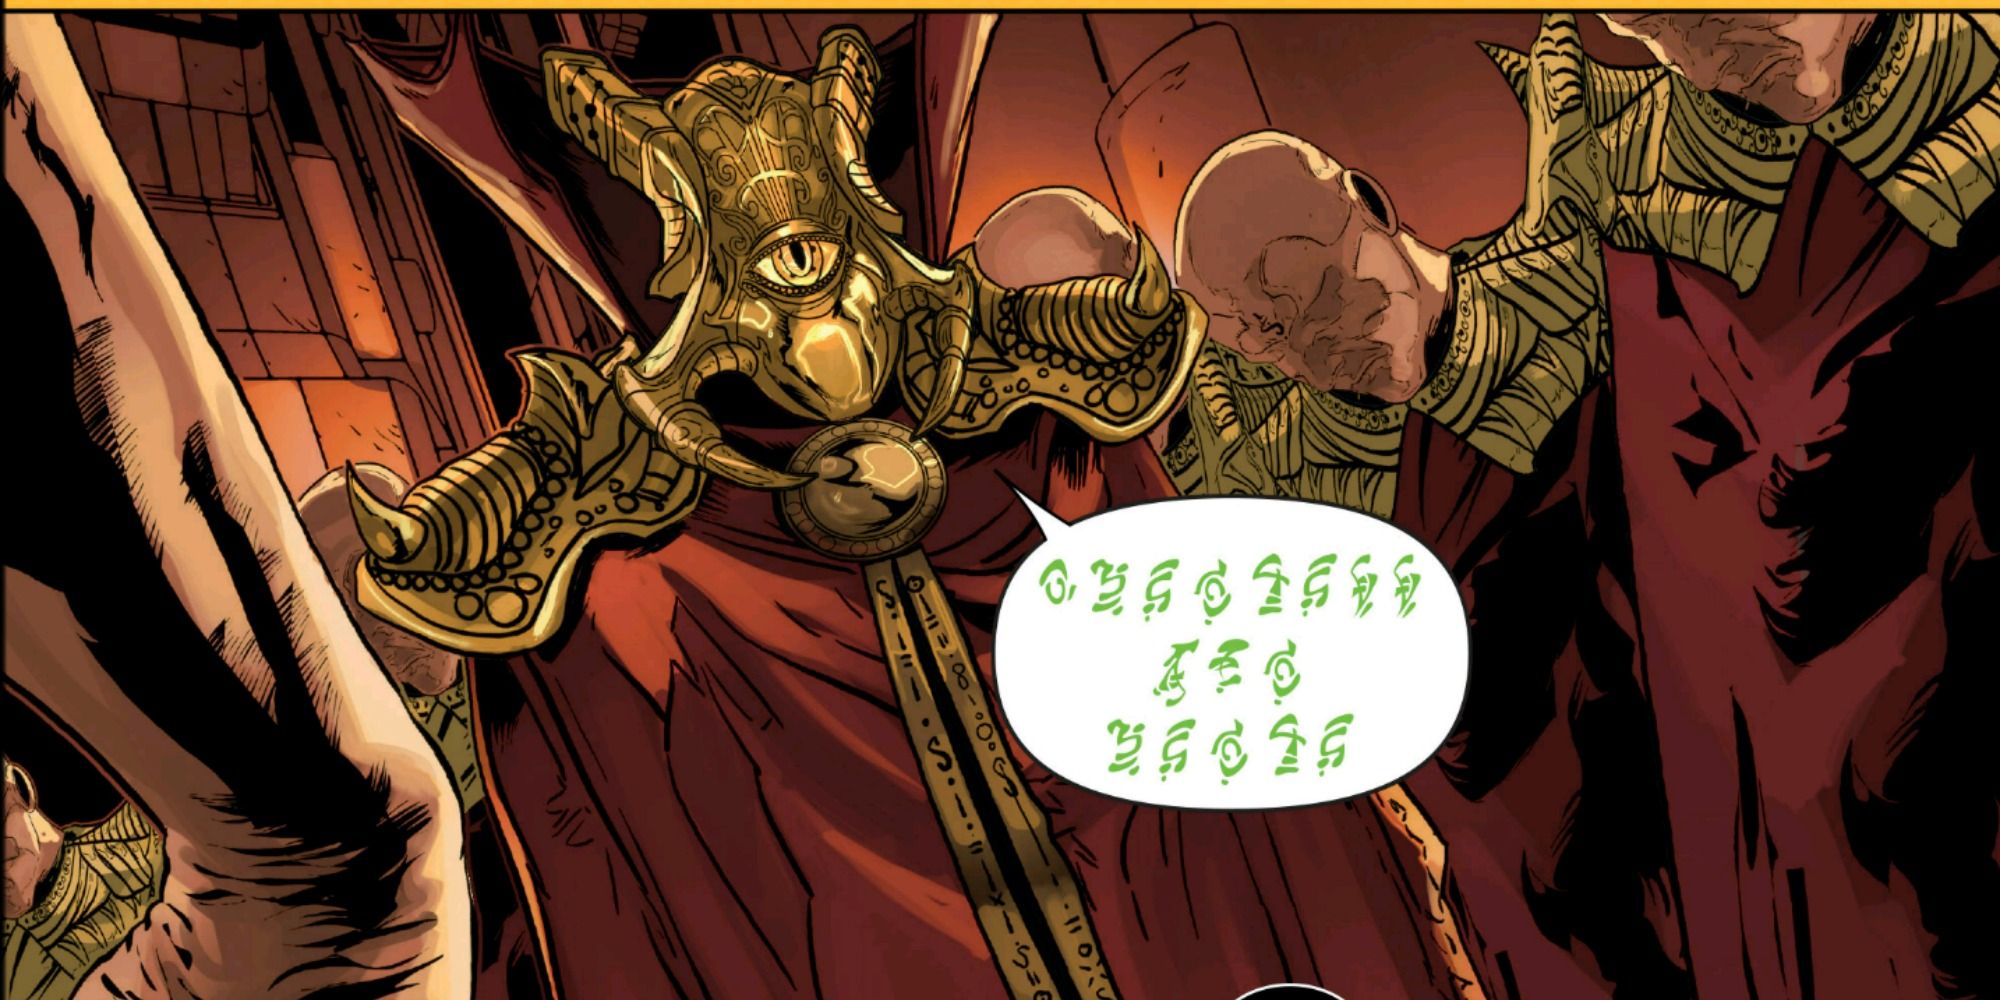 Black Priest Doctor Strange speaks spells in Marvel Comics.